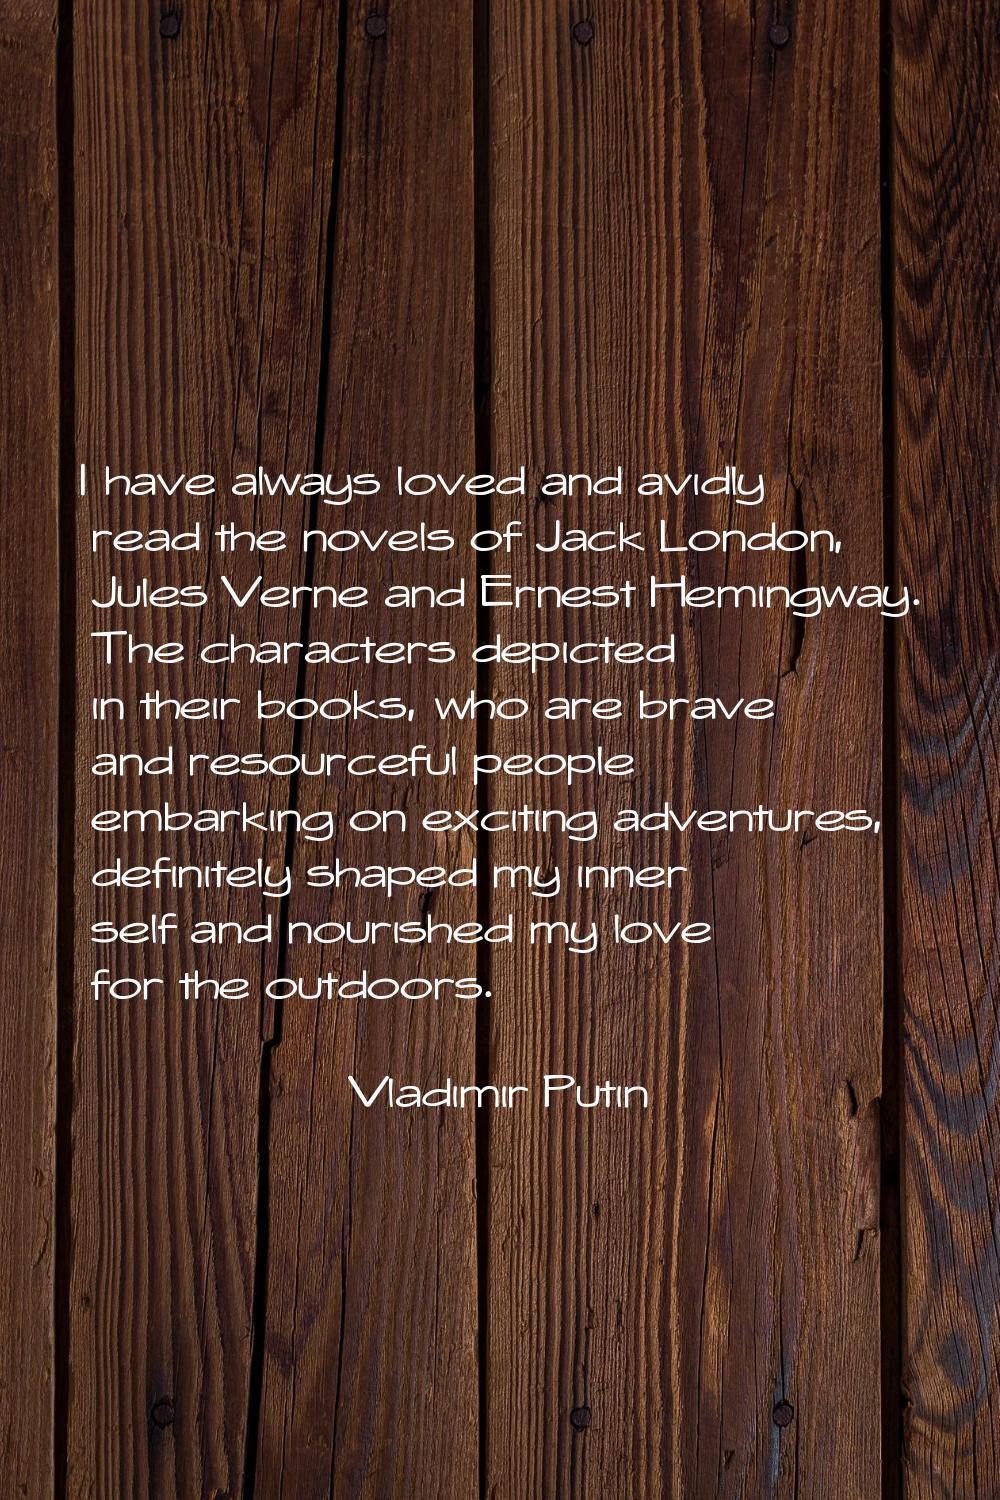 I have always loved and avidly read the novels of Jack London, Jules Verne and Ernest Hemingway. Th